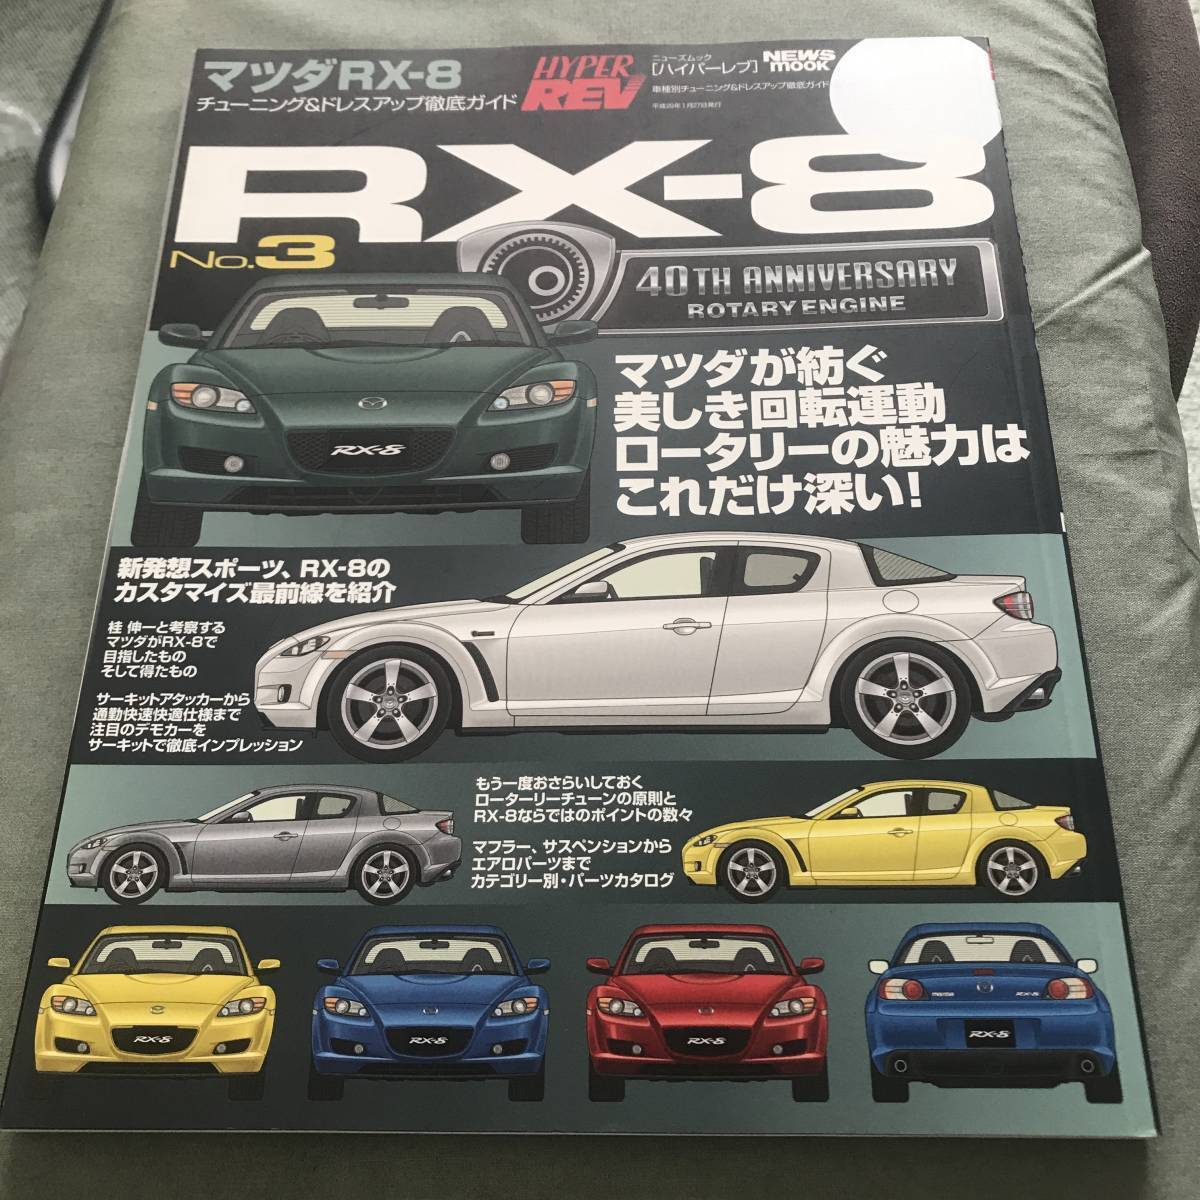 Mazda RX-8 No.3 Hyper REV 127 Tuning & Dress up Guide Car Book Japan Japanese